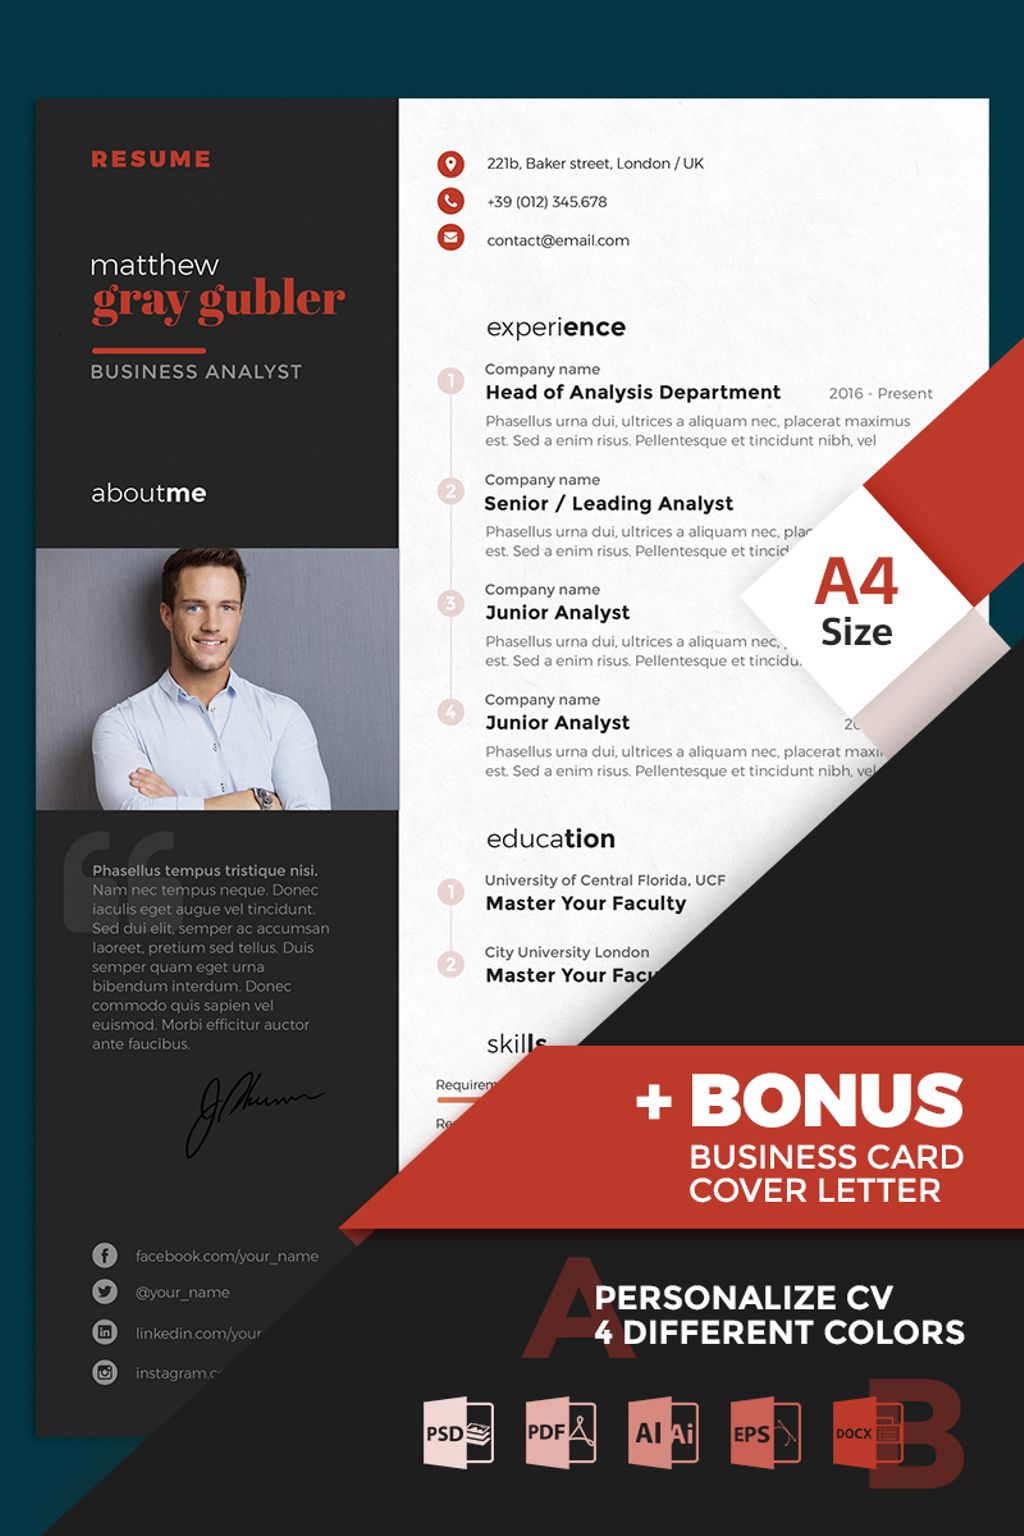 Matthew Gray Gubler Business Analyst Resume Template